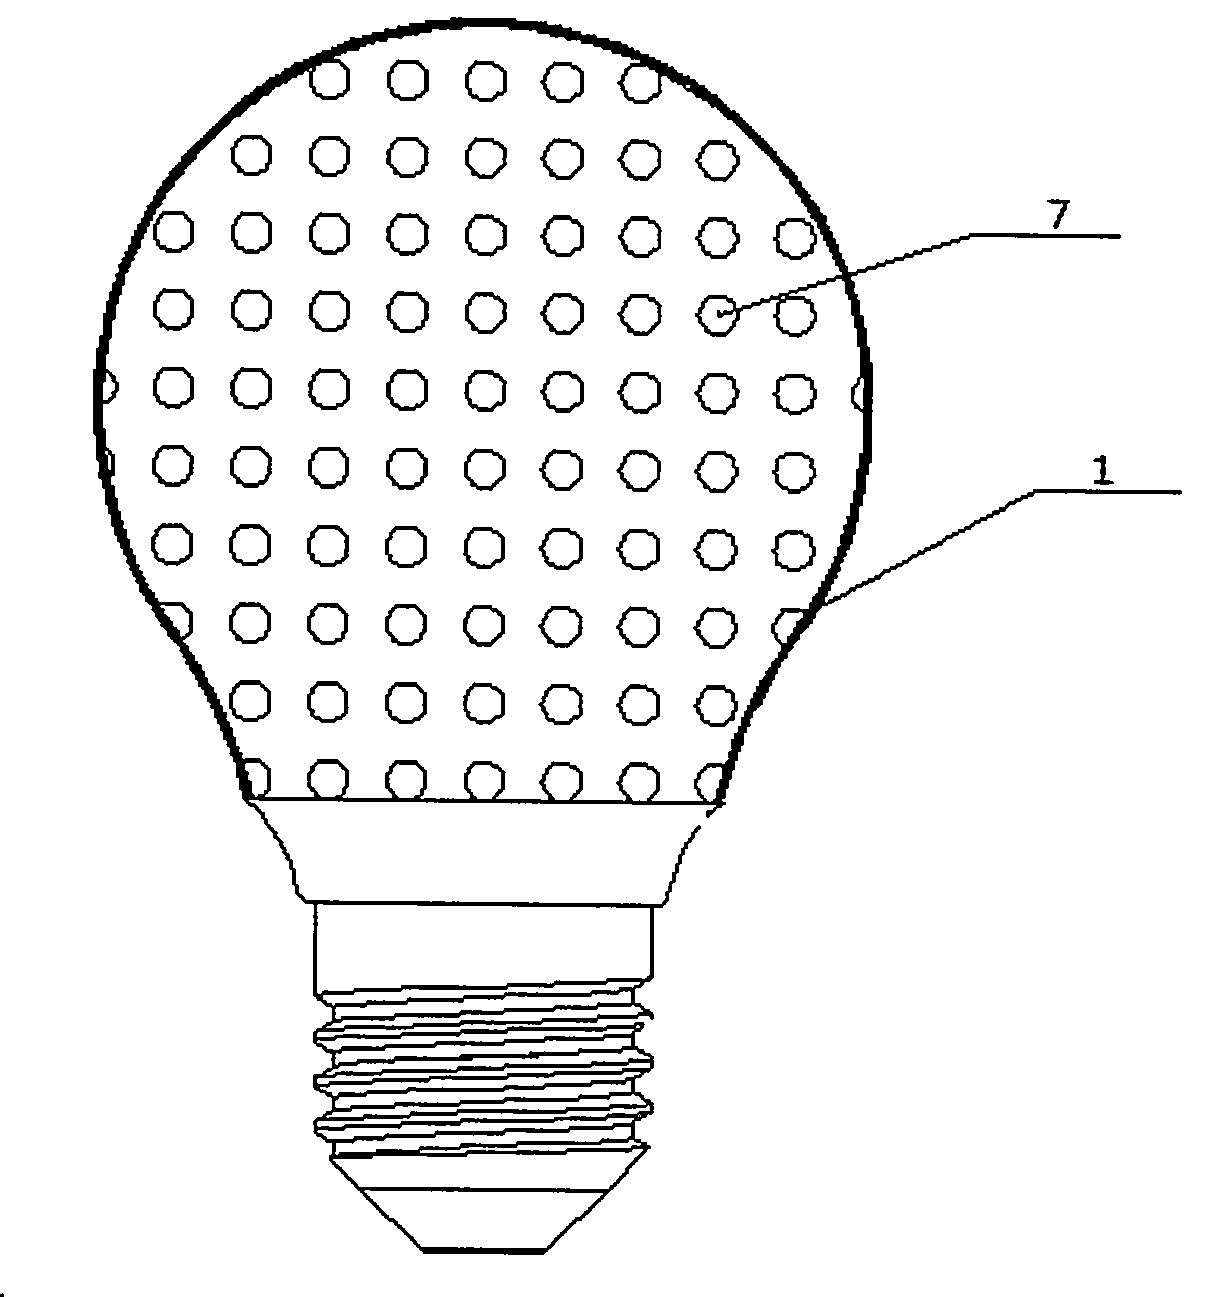 Multiple-point-distribution LED lamp